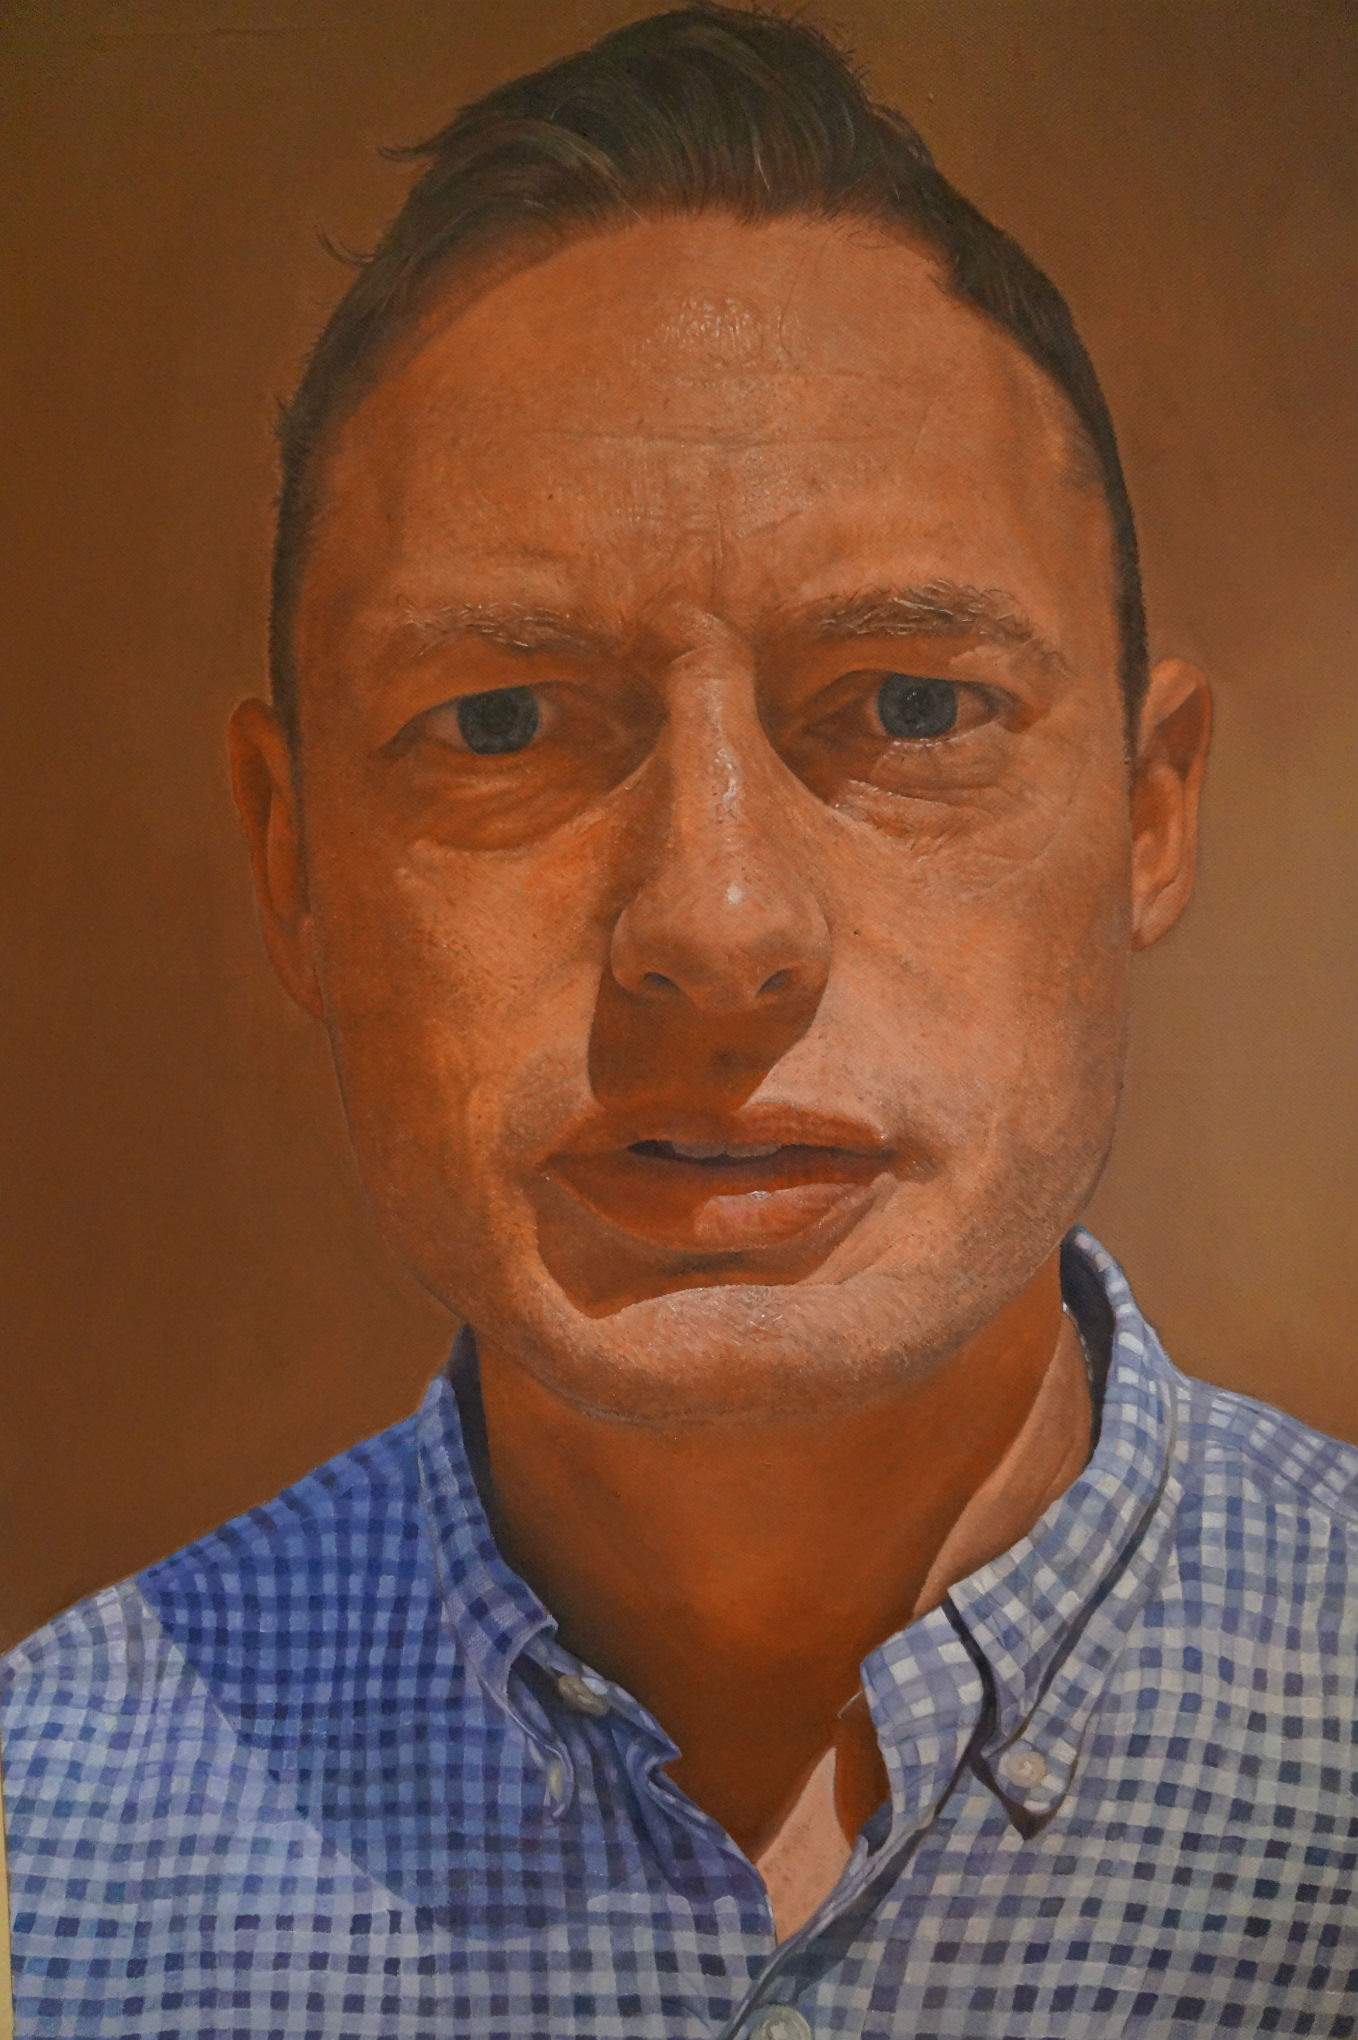 James Earley Self Portrait